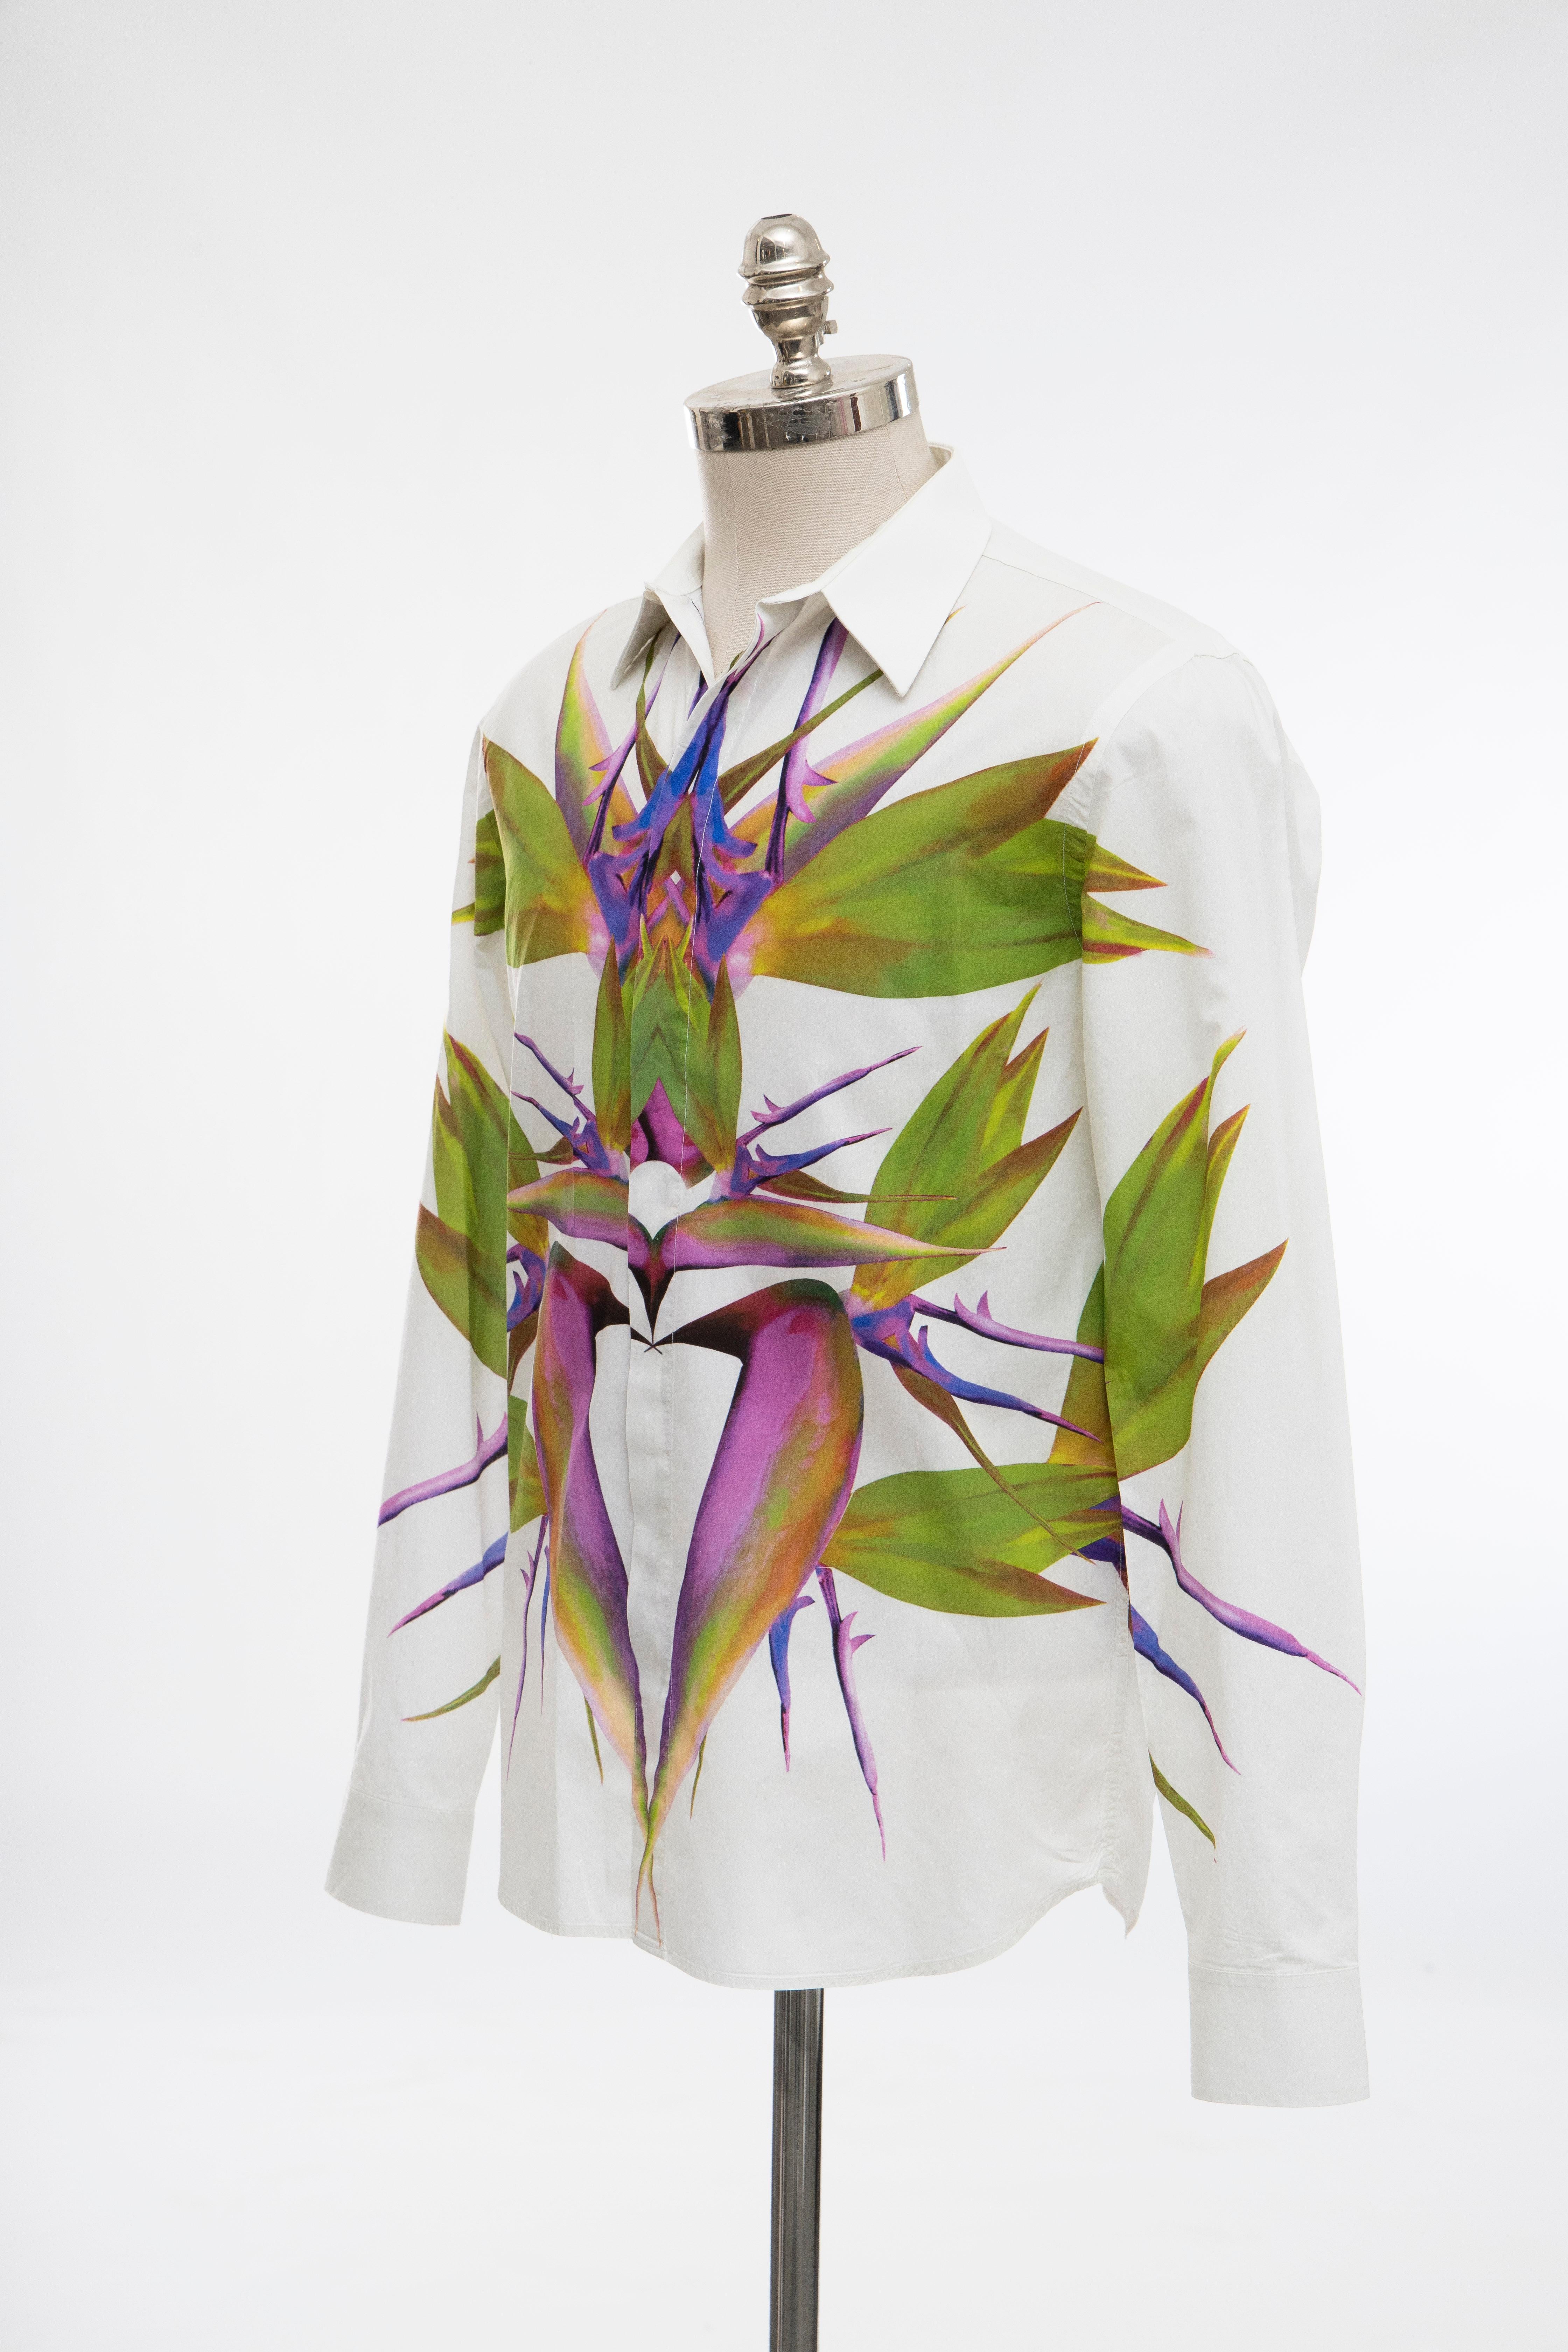 Riccardo Tisci for Givenchy Men's Cotton Birds of Paradise Shirt, Spring 2012 4